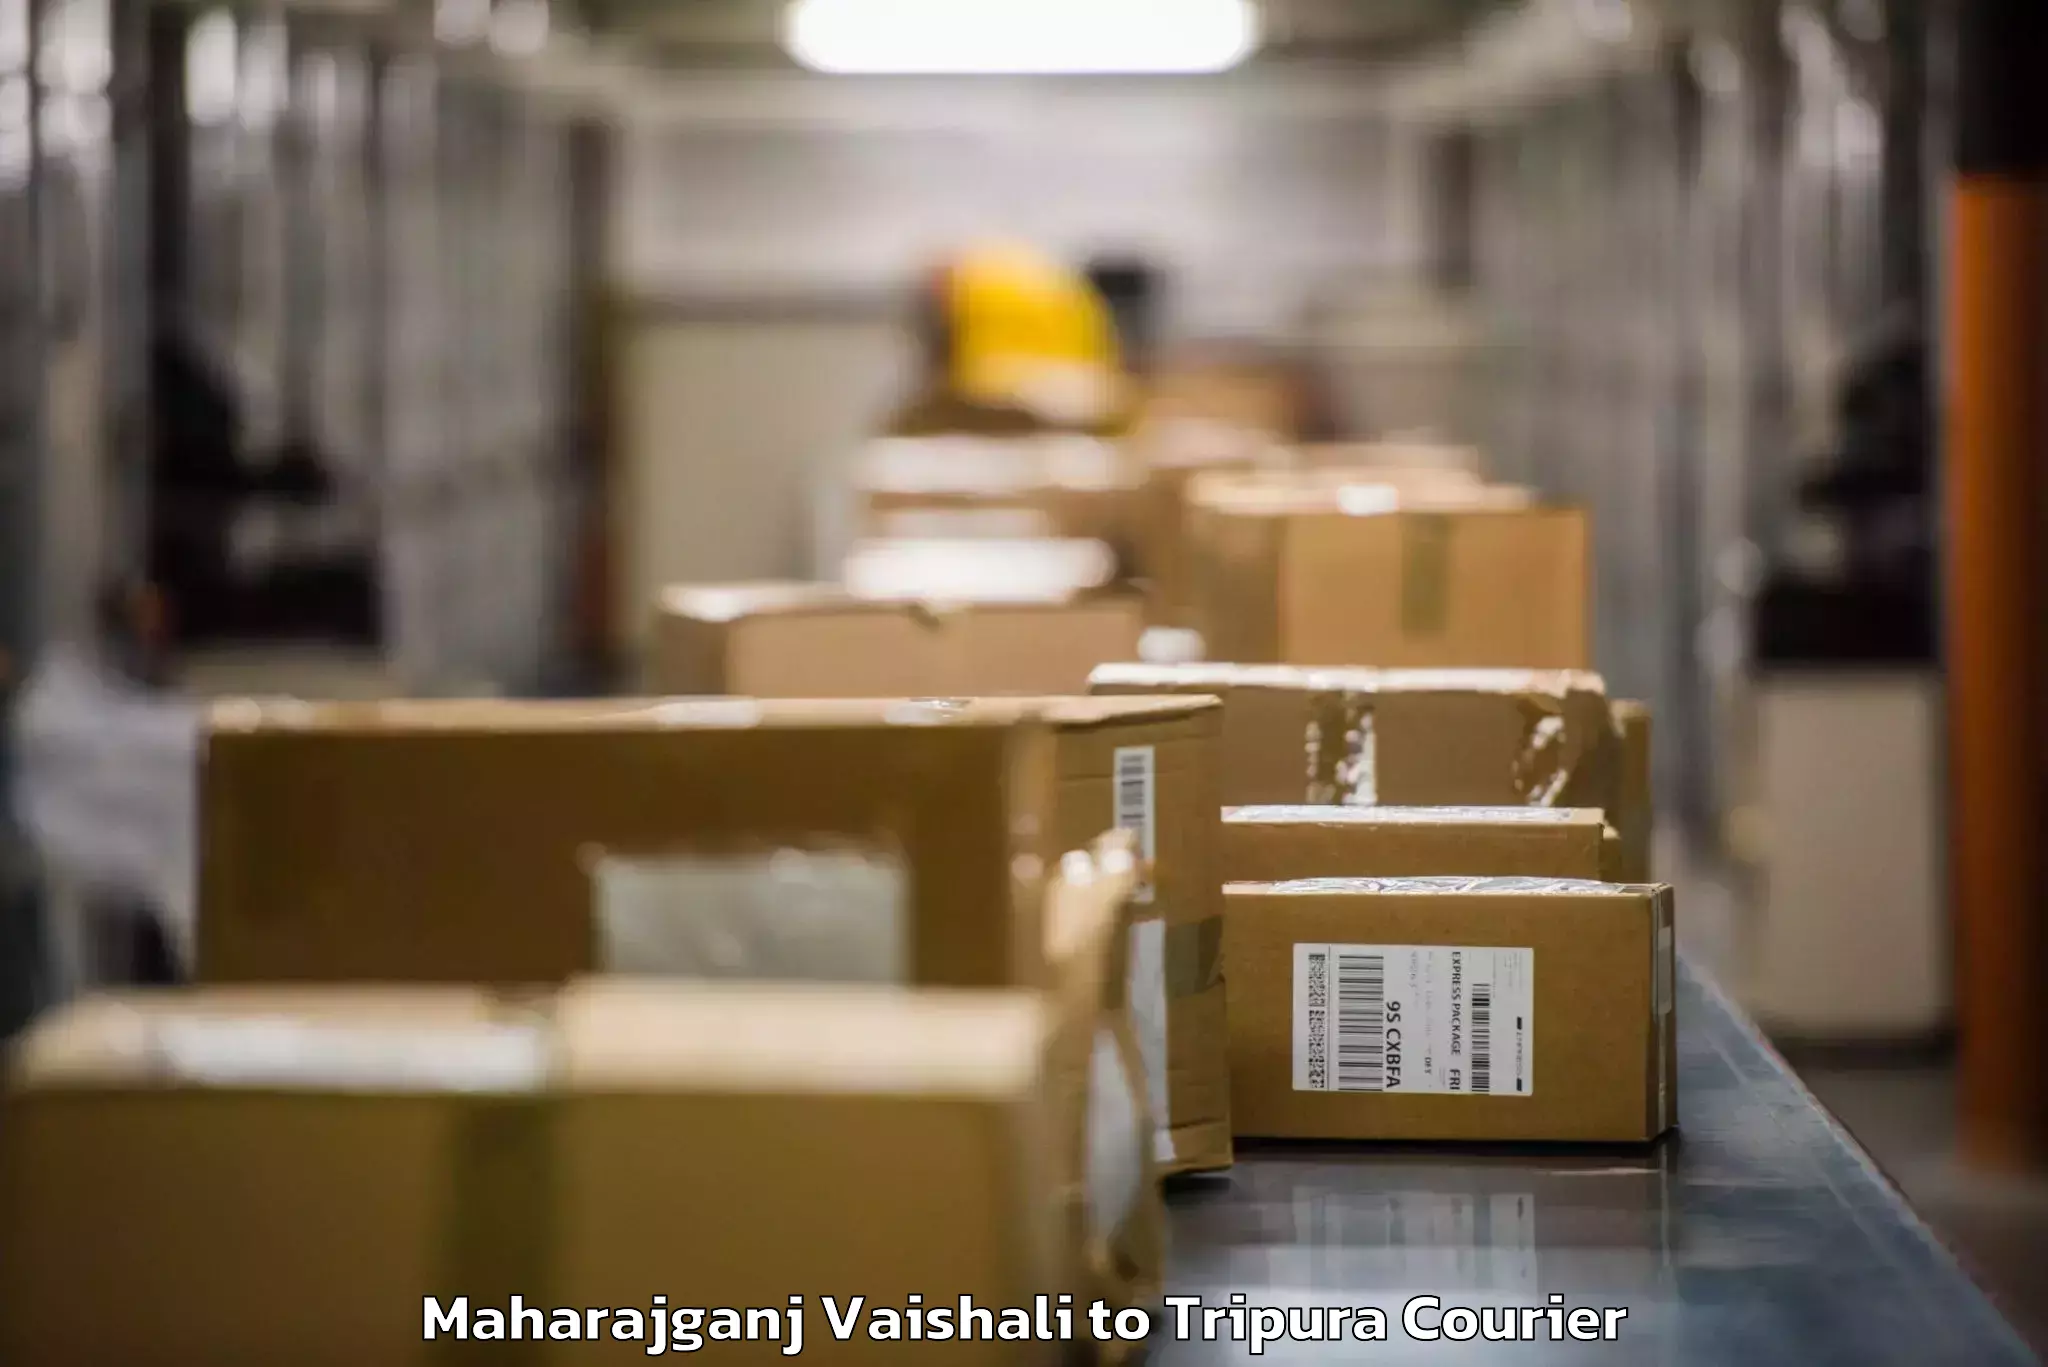 Baggage transport network Maharajganj Vaishali to Manughat